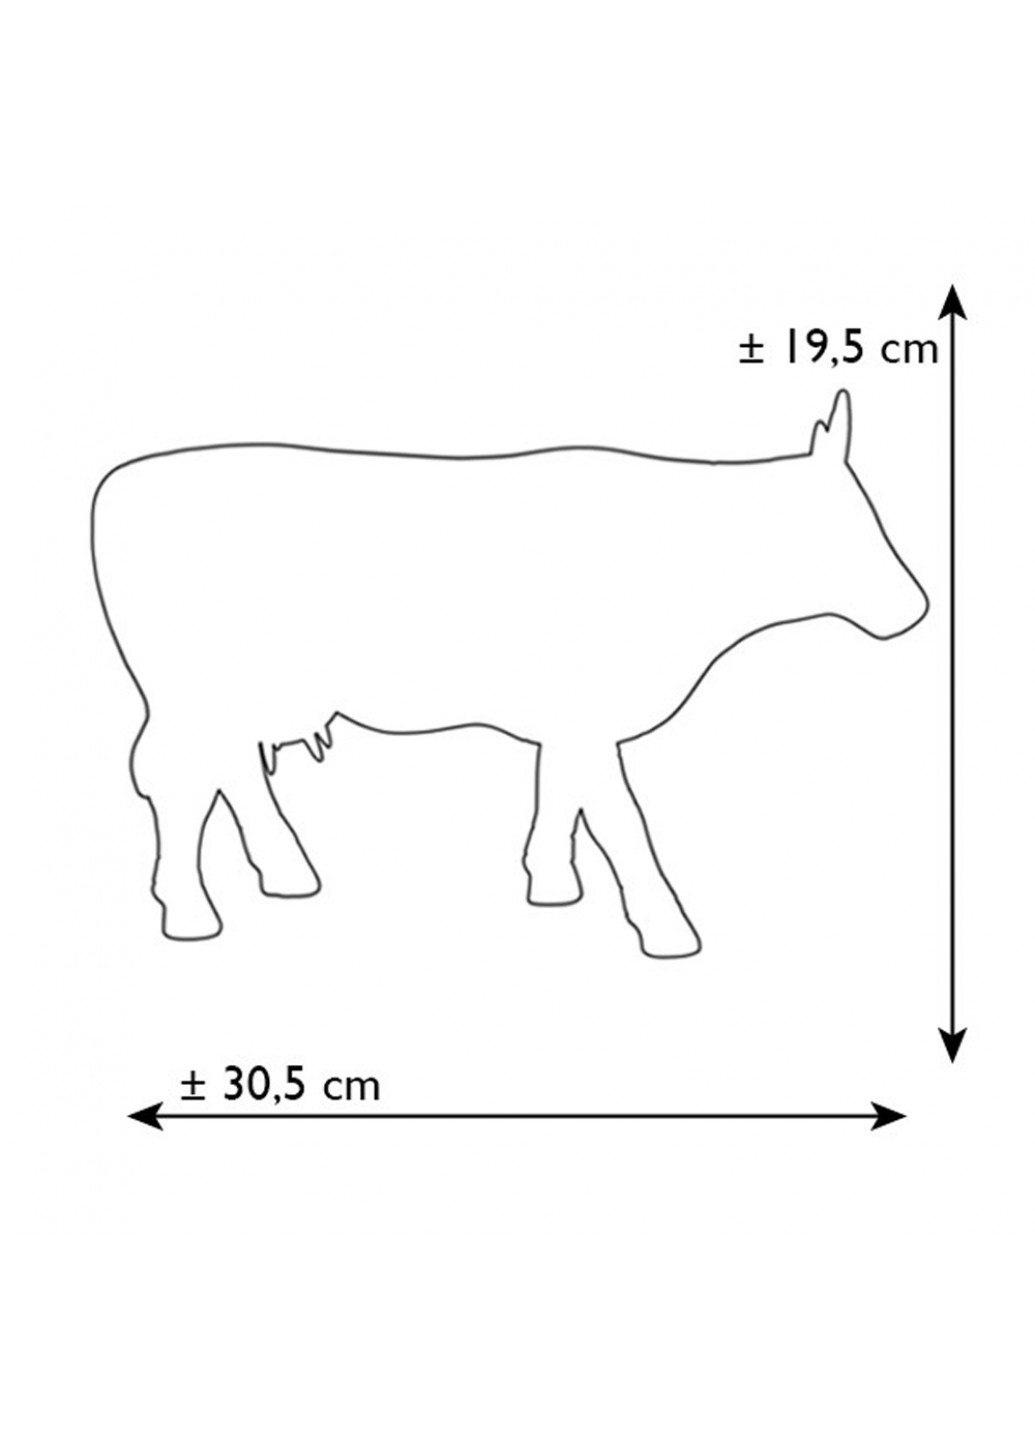 Коллекционная статуэтка корова The Golden Byzantine; Size L Cow Parade (224224156)